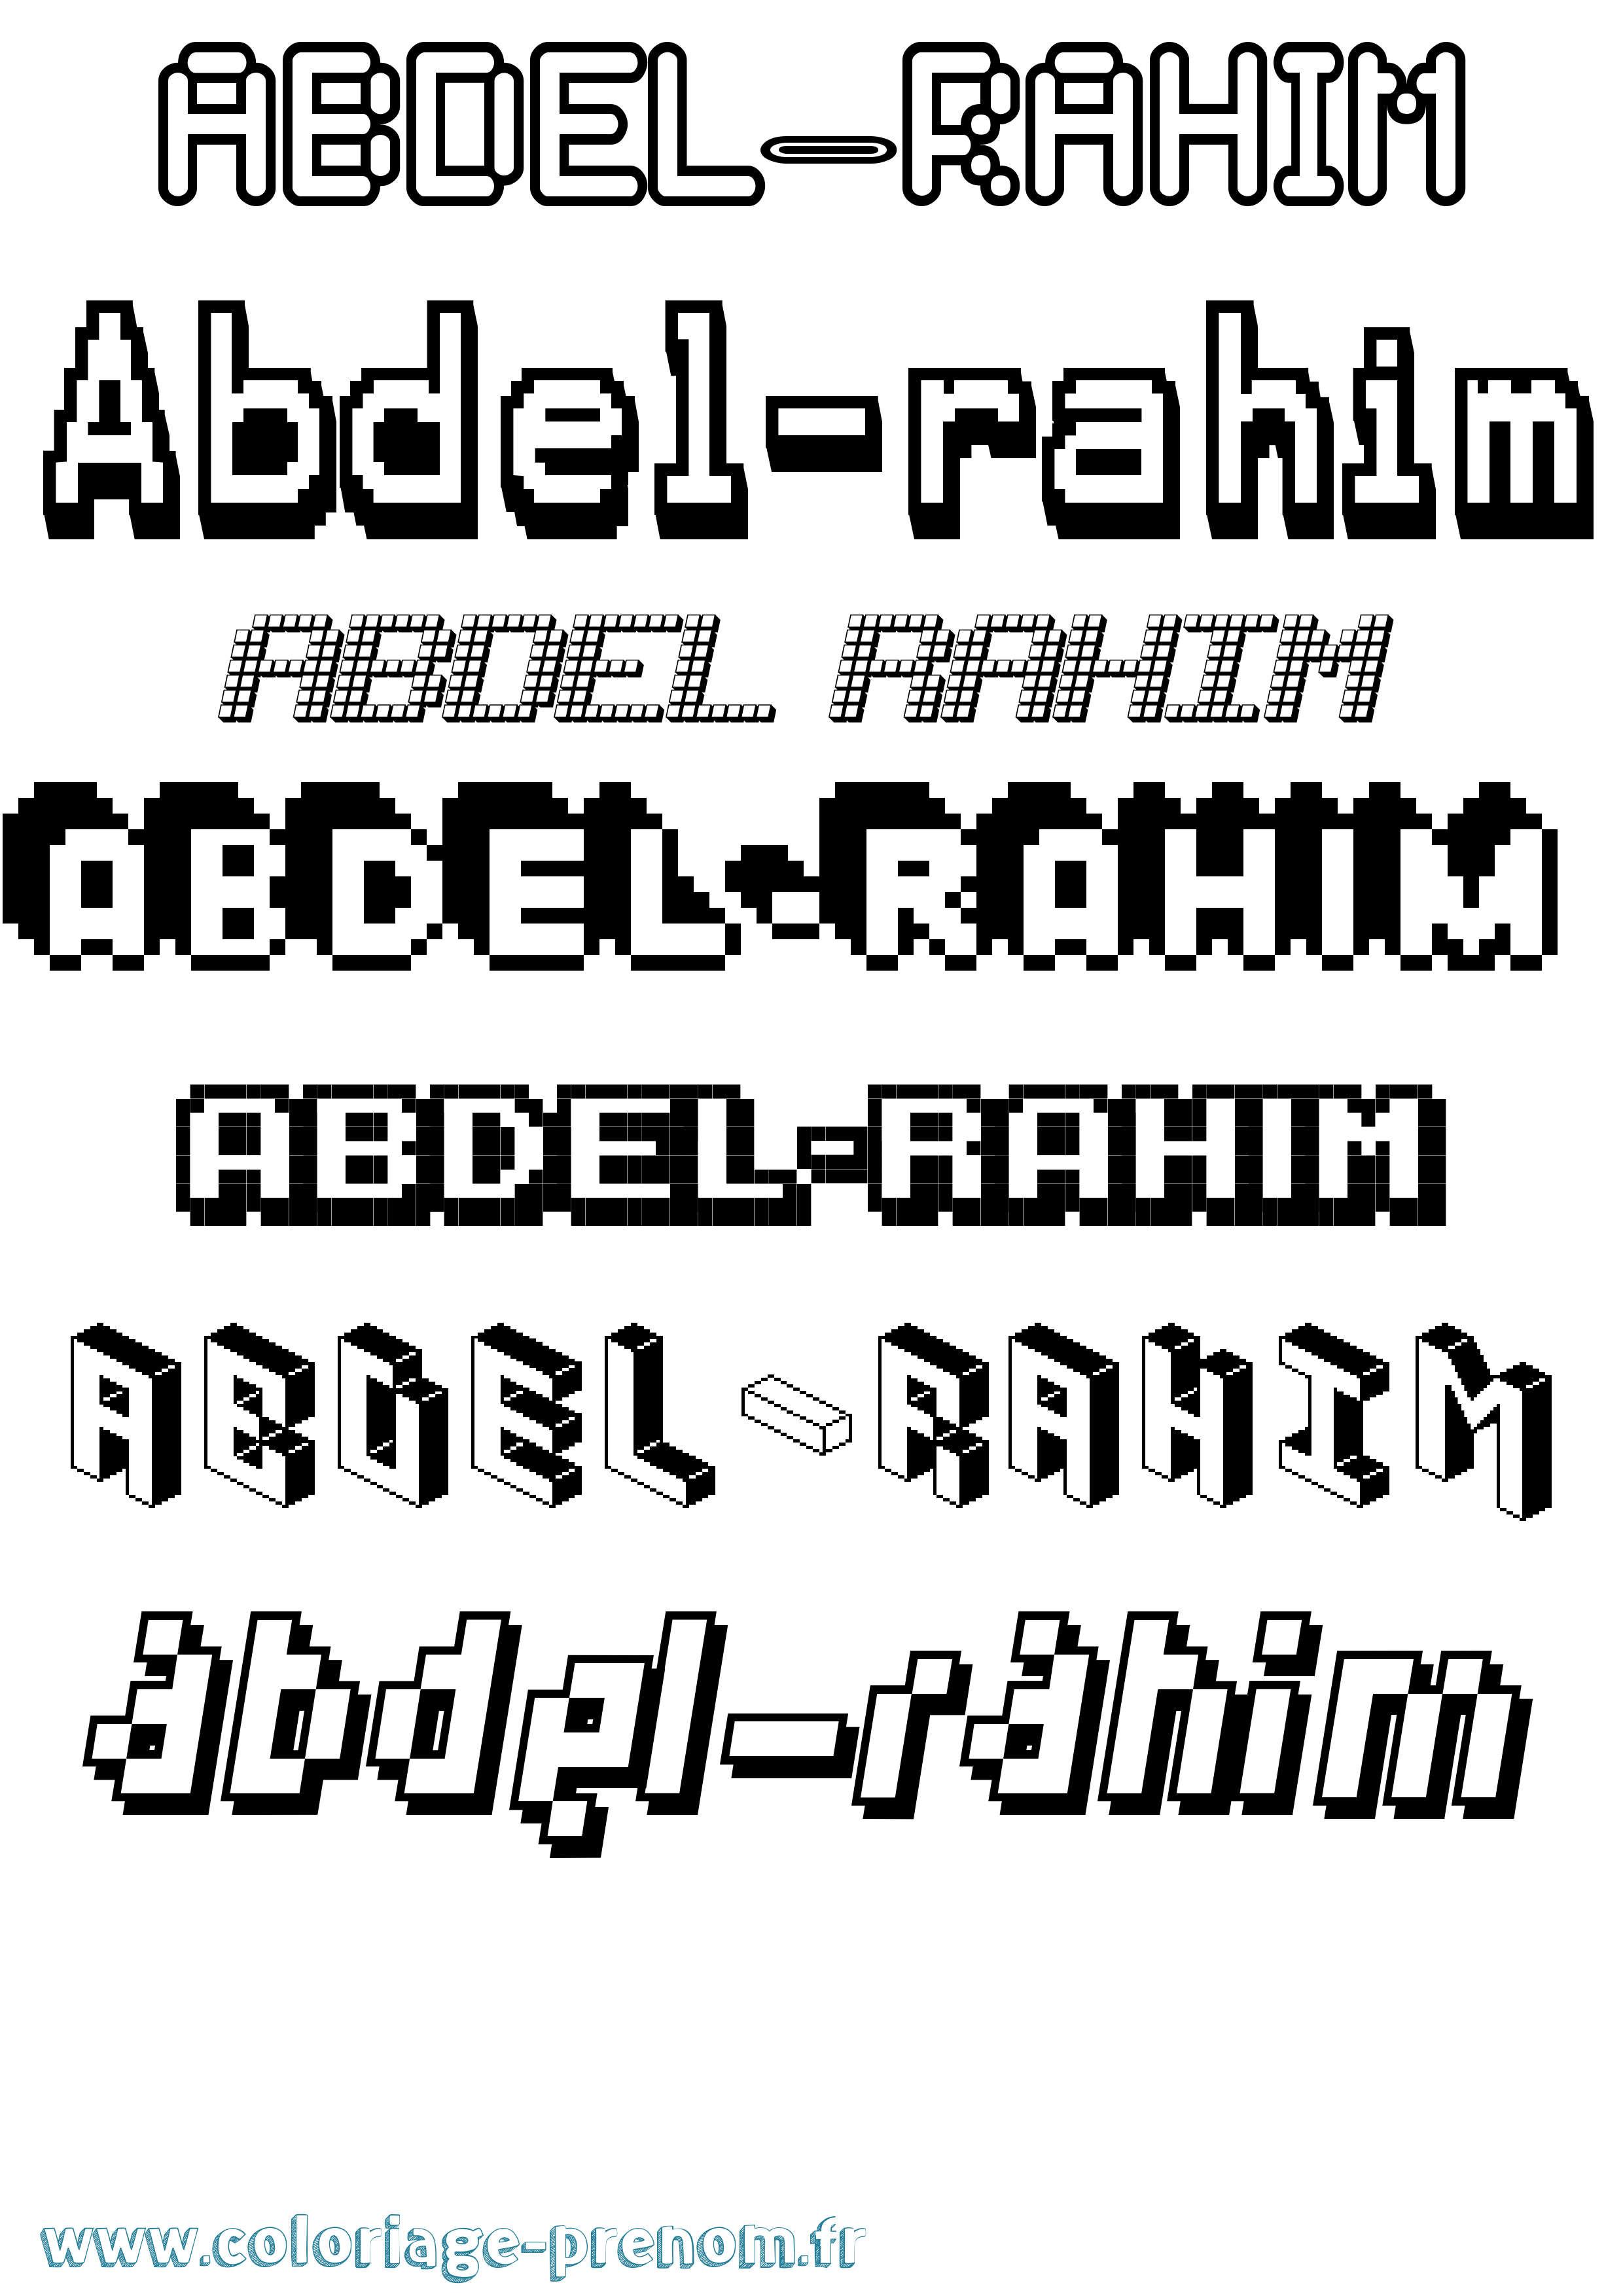 Coloriage prénom Abdel-Rahim Pixel